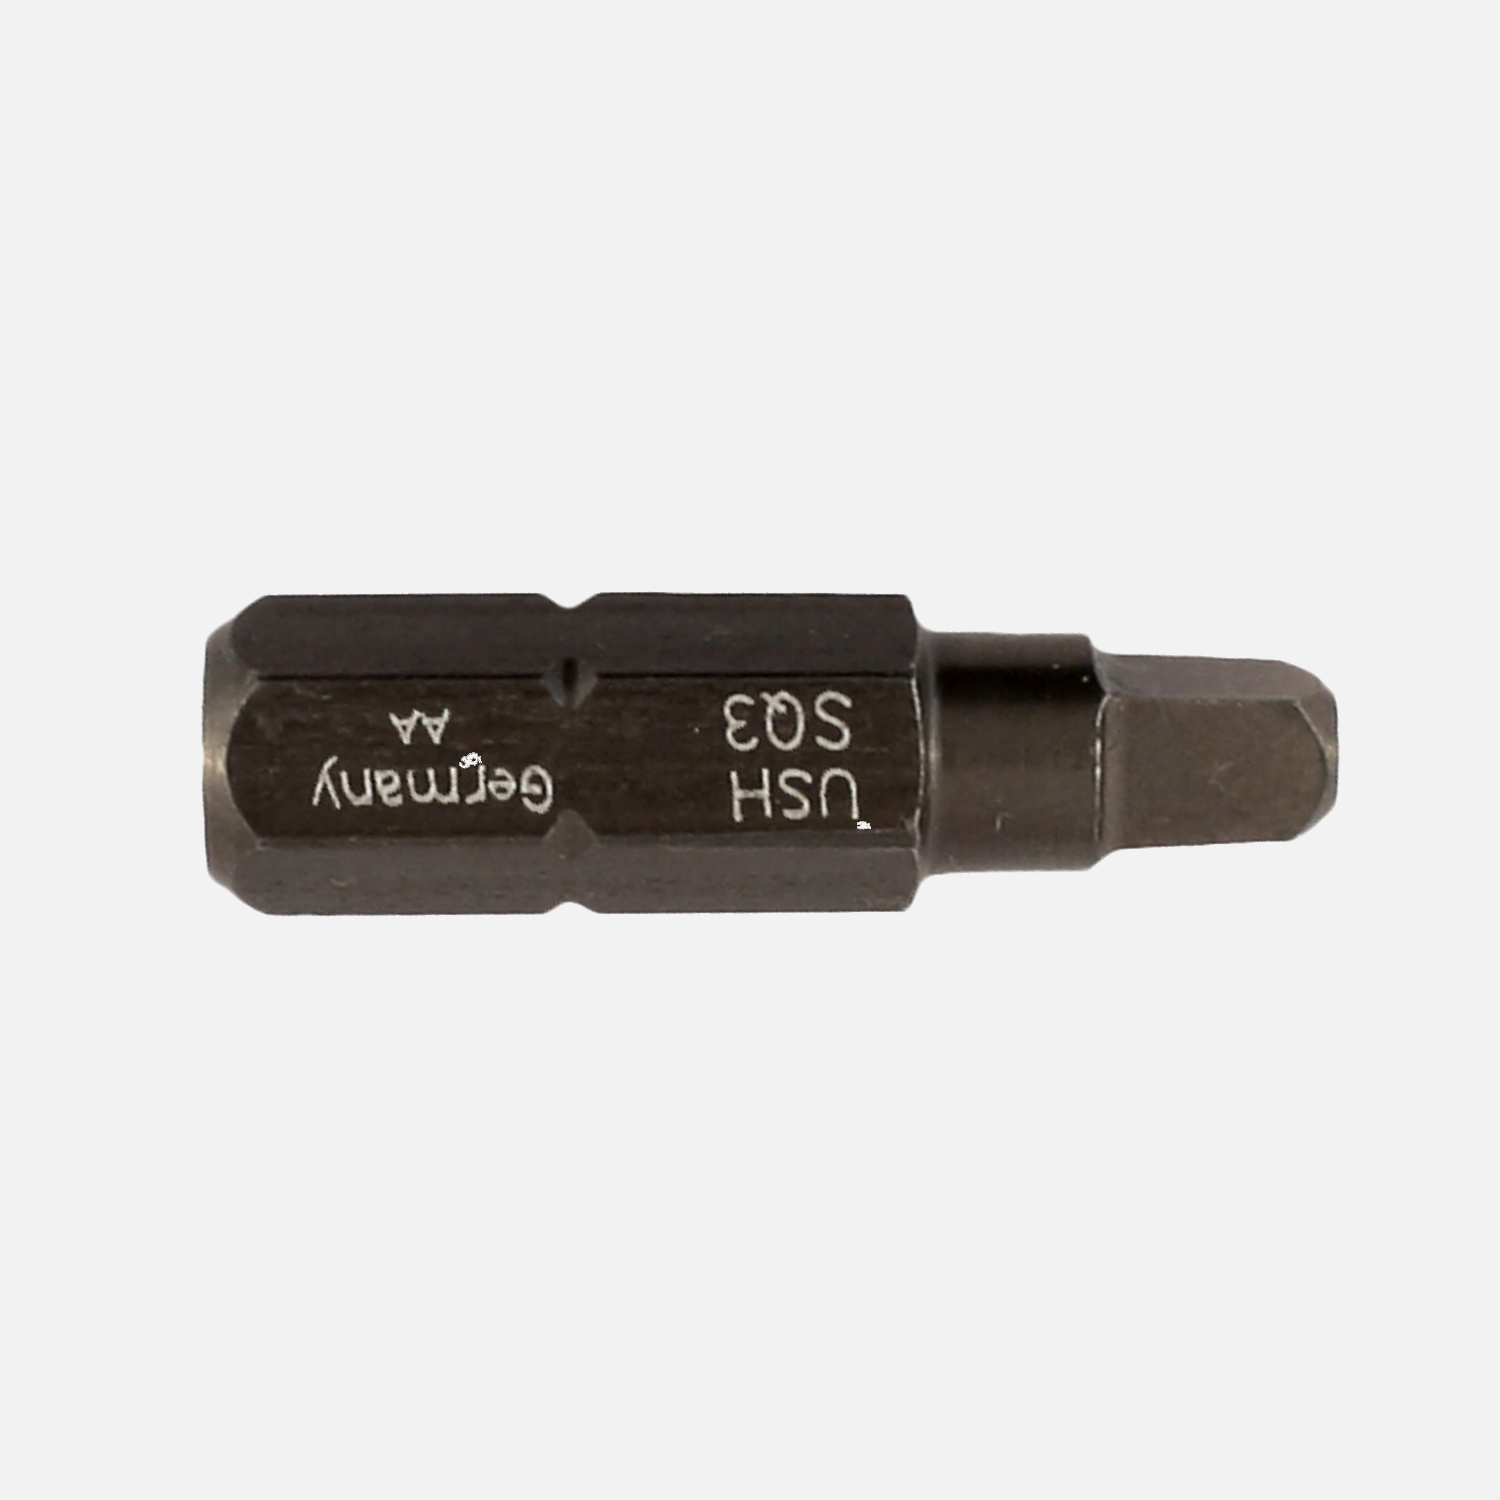 5 Robertson Torsionsbits - Industrie Bits - Gr. 3 1/4" 25mm High Quality